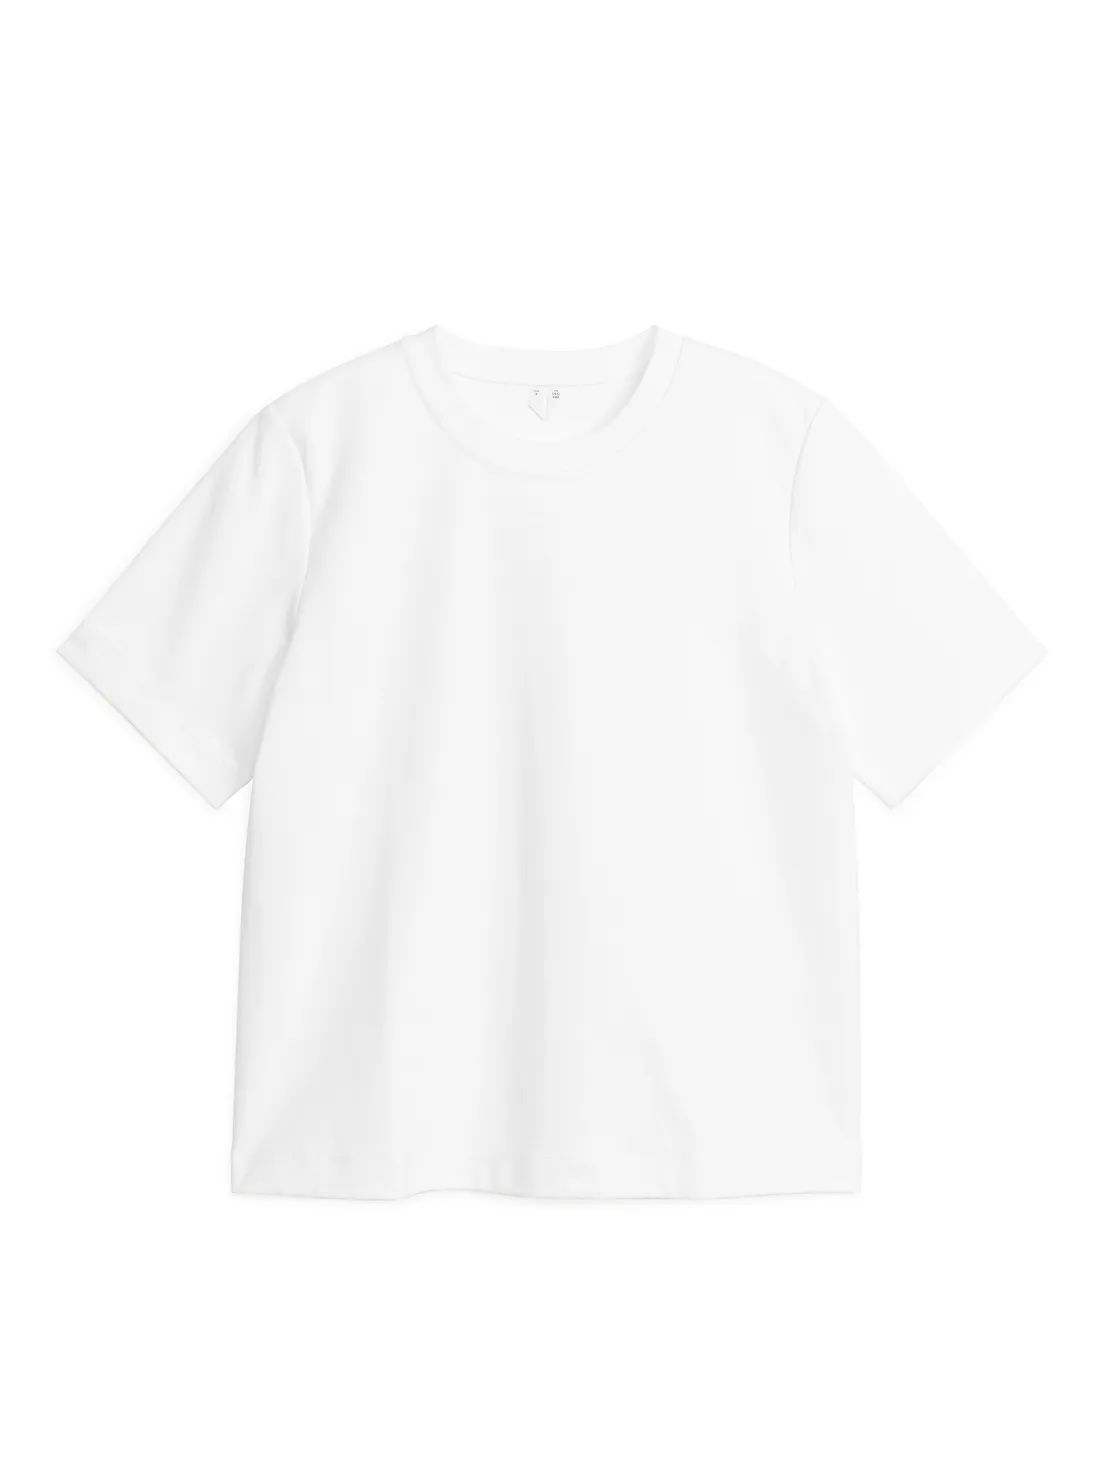 Schweres T-Shirt - Weiß - Tops - ARKET DE | ARKET (EU)